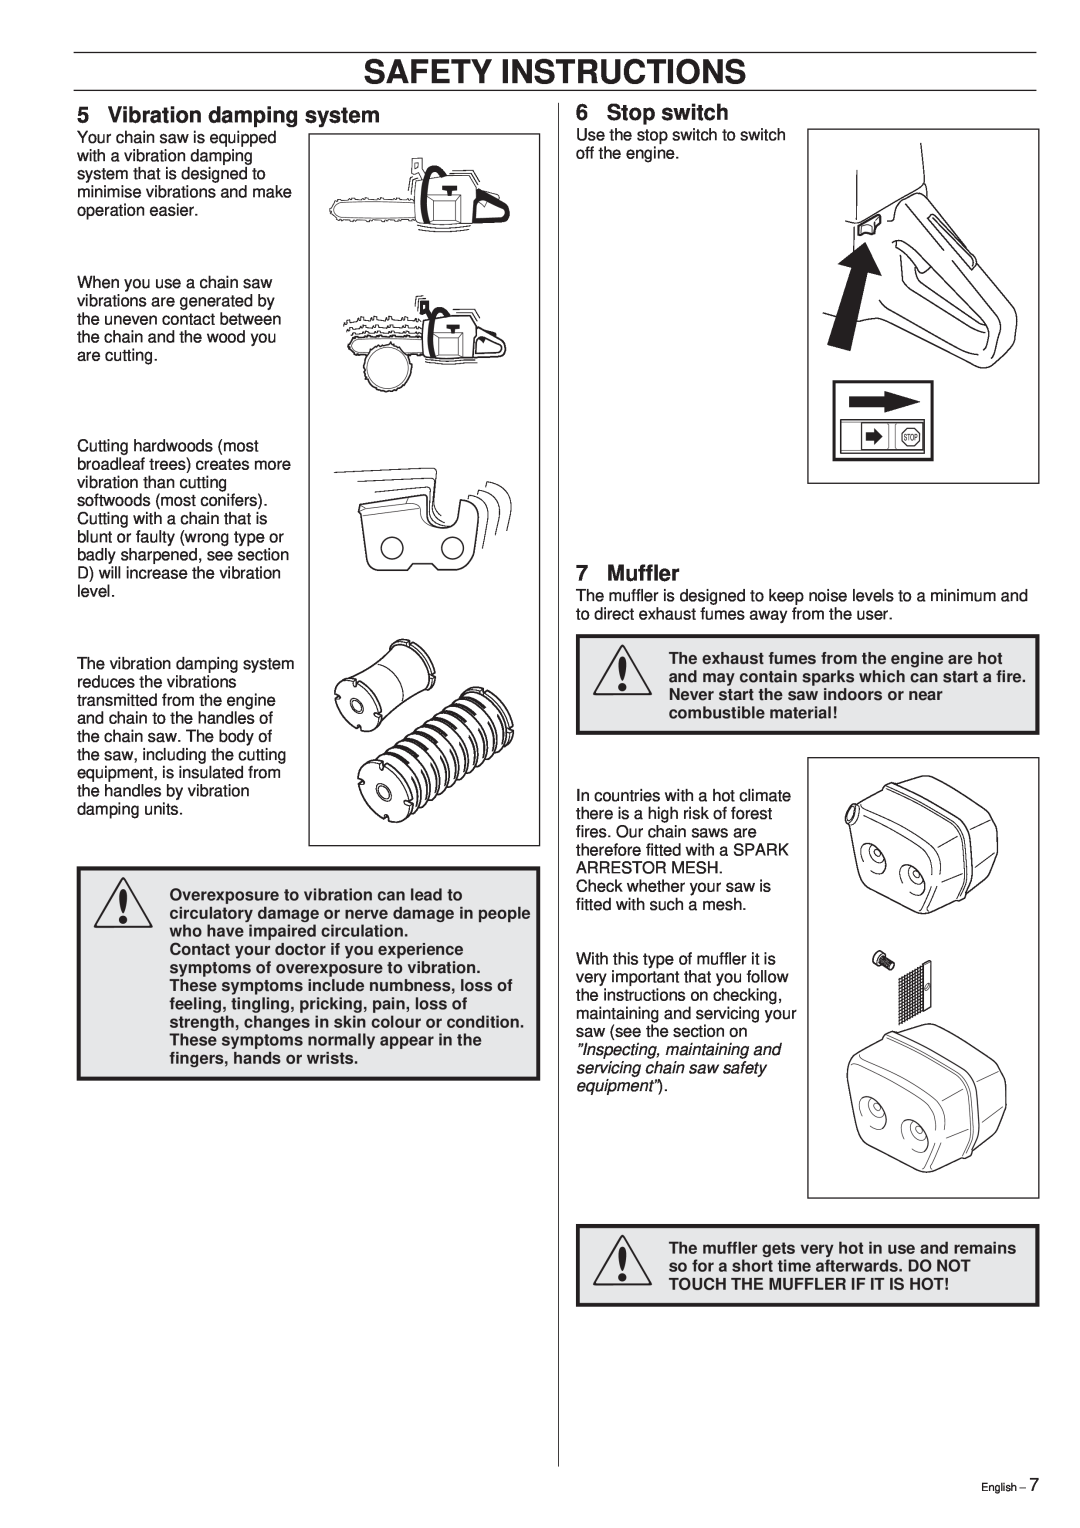 Husqvarna 40 manual Vibration damping system, Stop switch, Muffler, Safety Instructions 